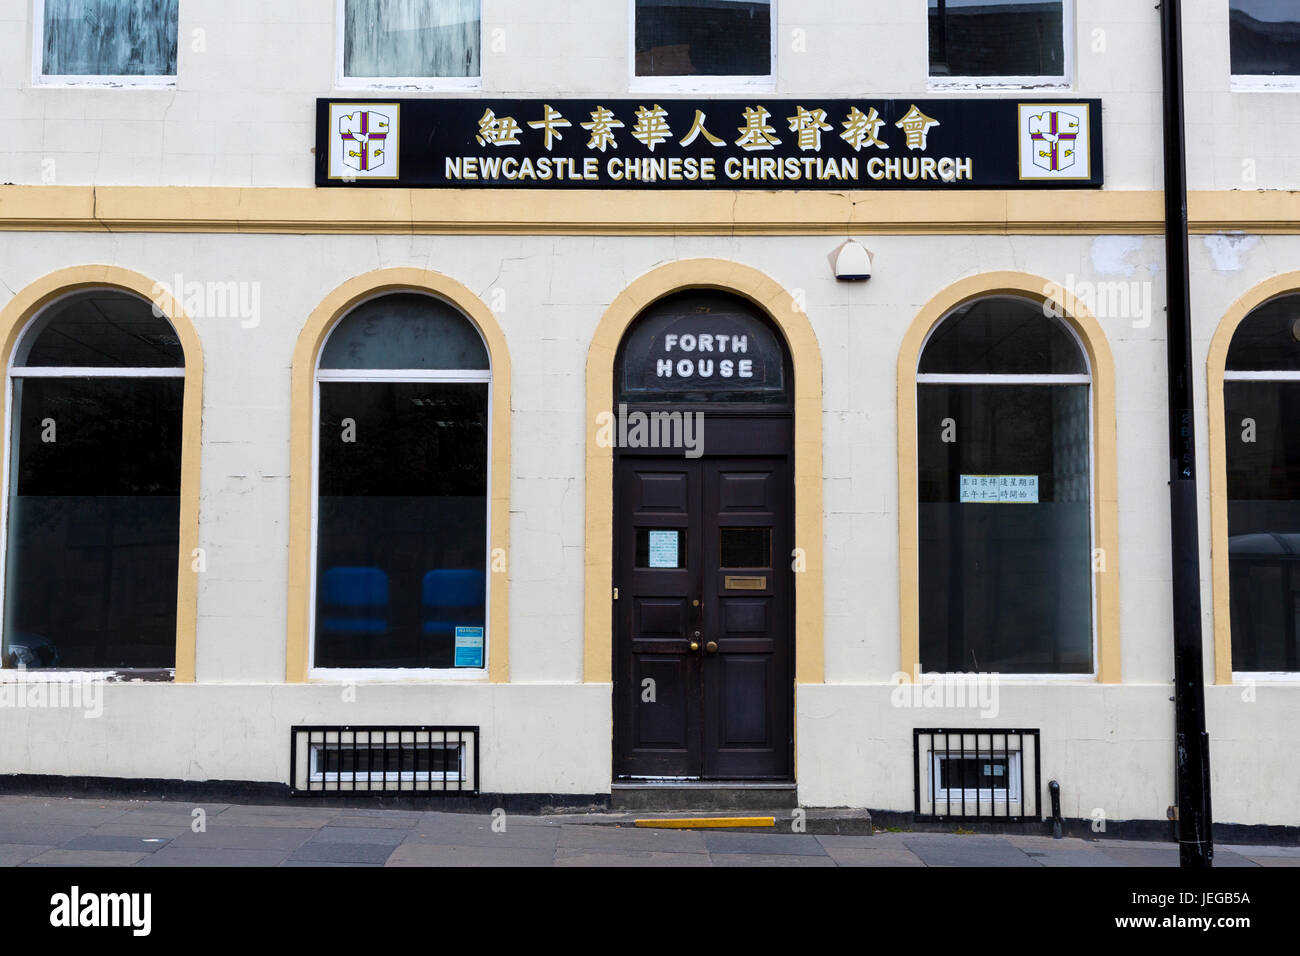 Newcastle-upon-Tyne, Inglaterra, Reino Unido. Chino Newcastle Iglesia Cristiana. Foto de stock